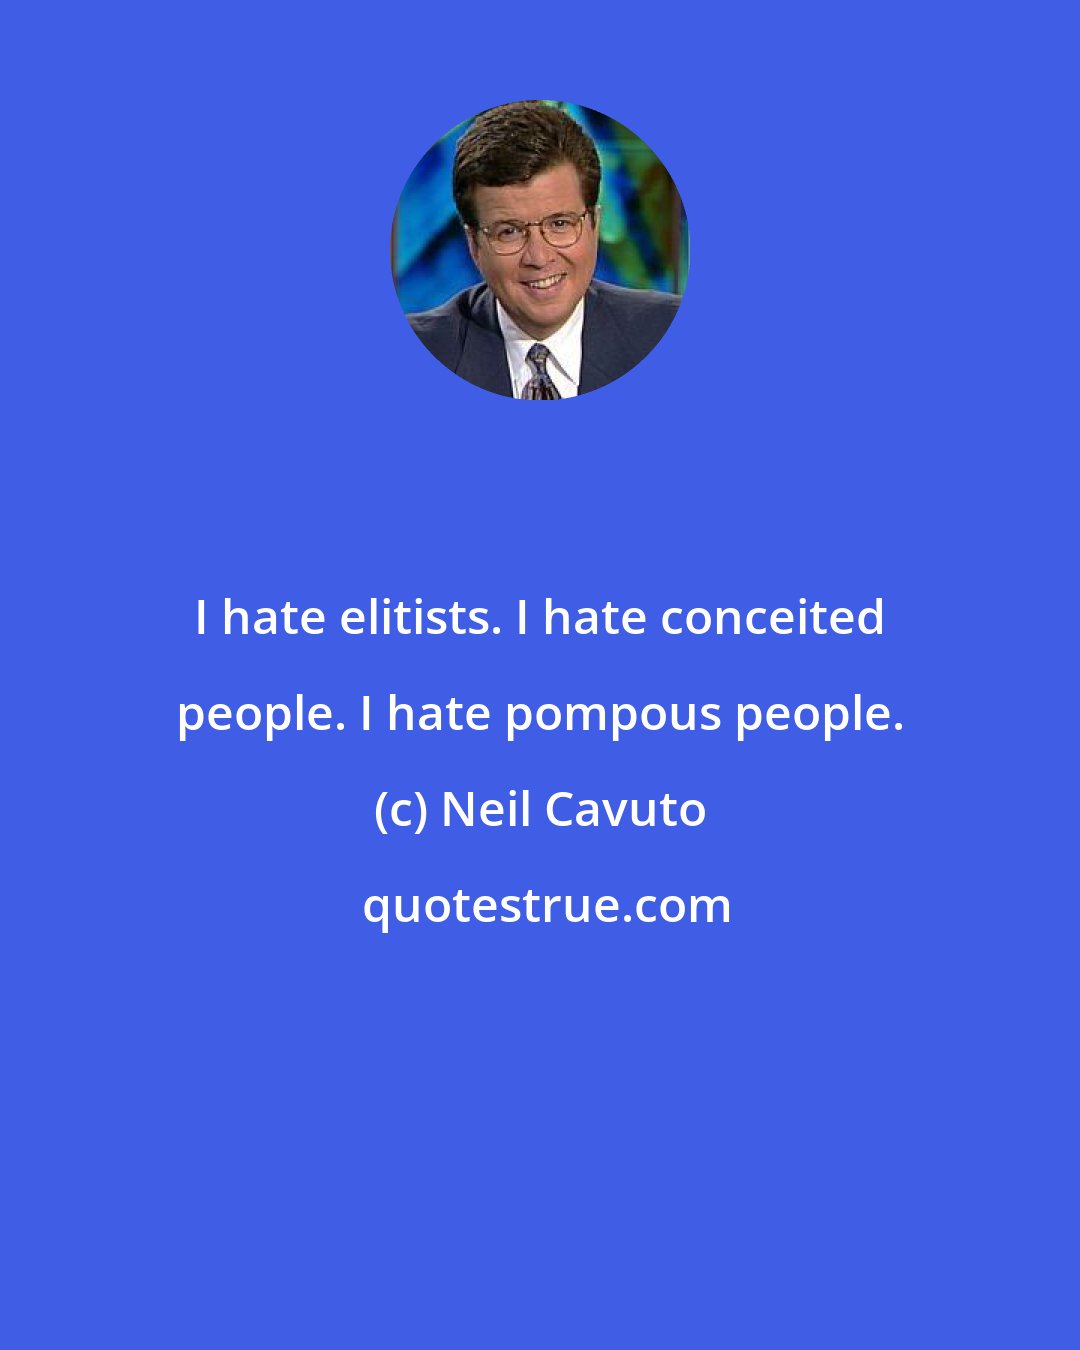 Neil Cavuto: I hate elitists. I hate conceited people. I hate pompous people.